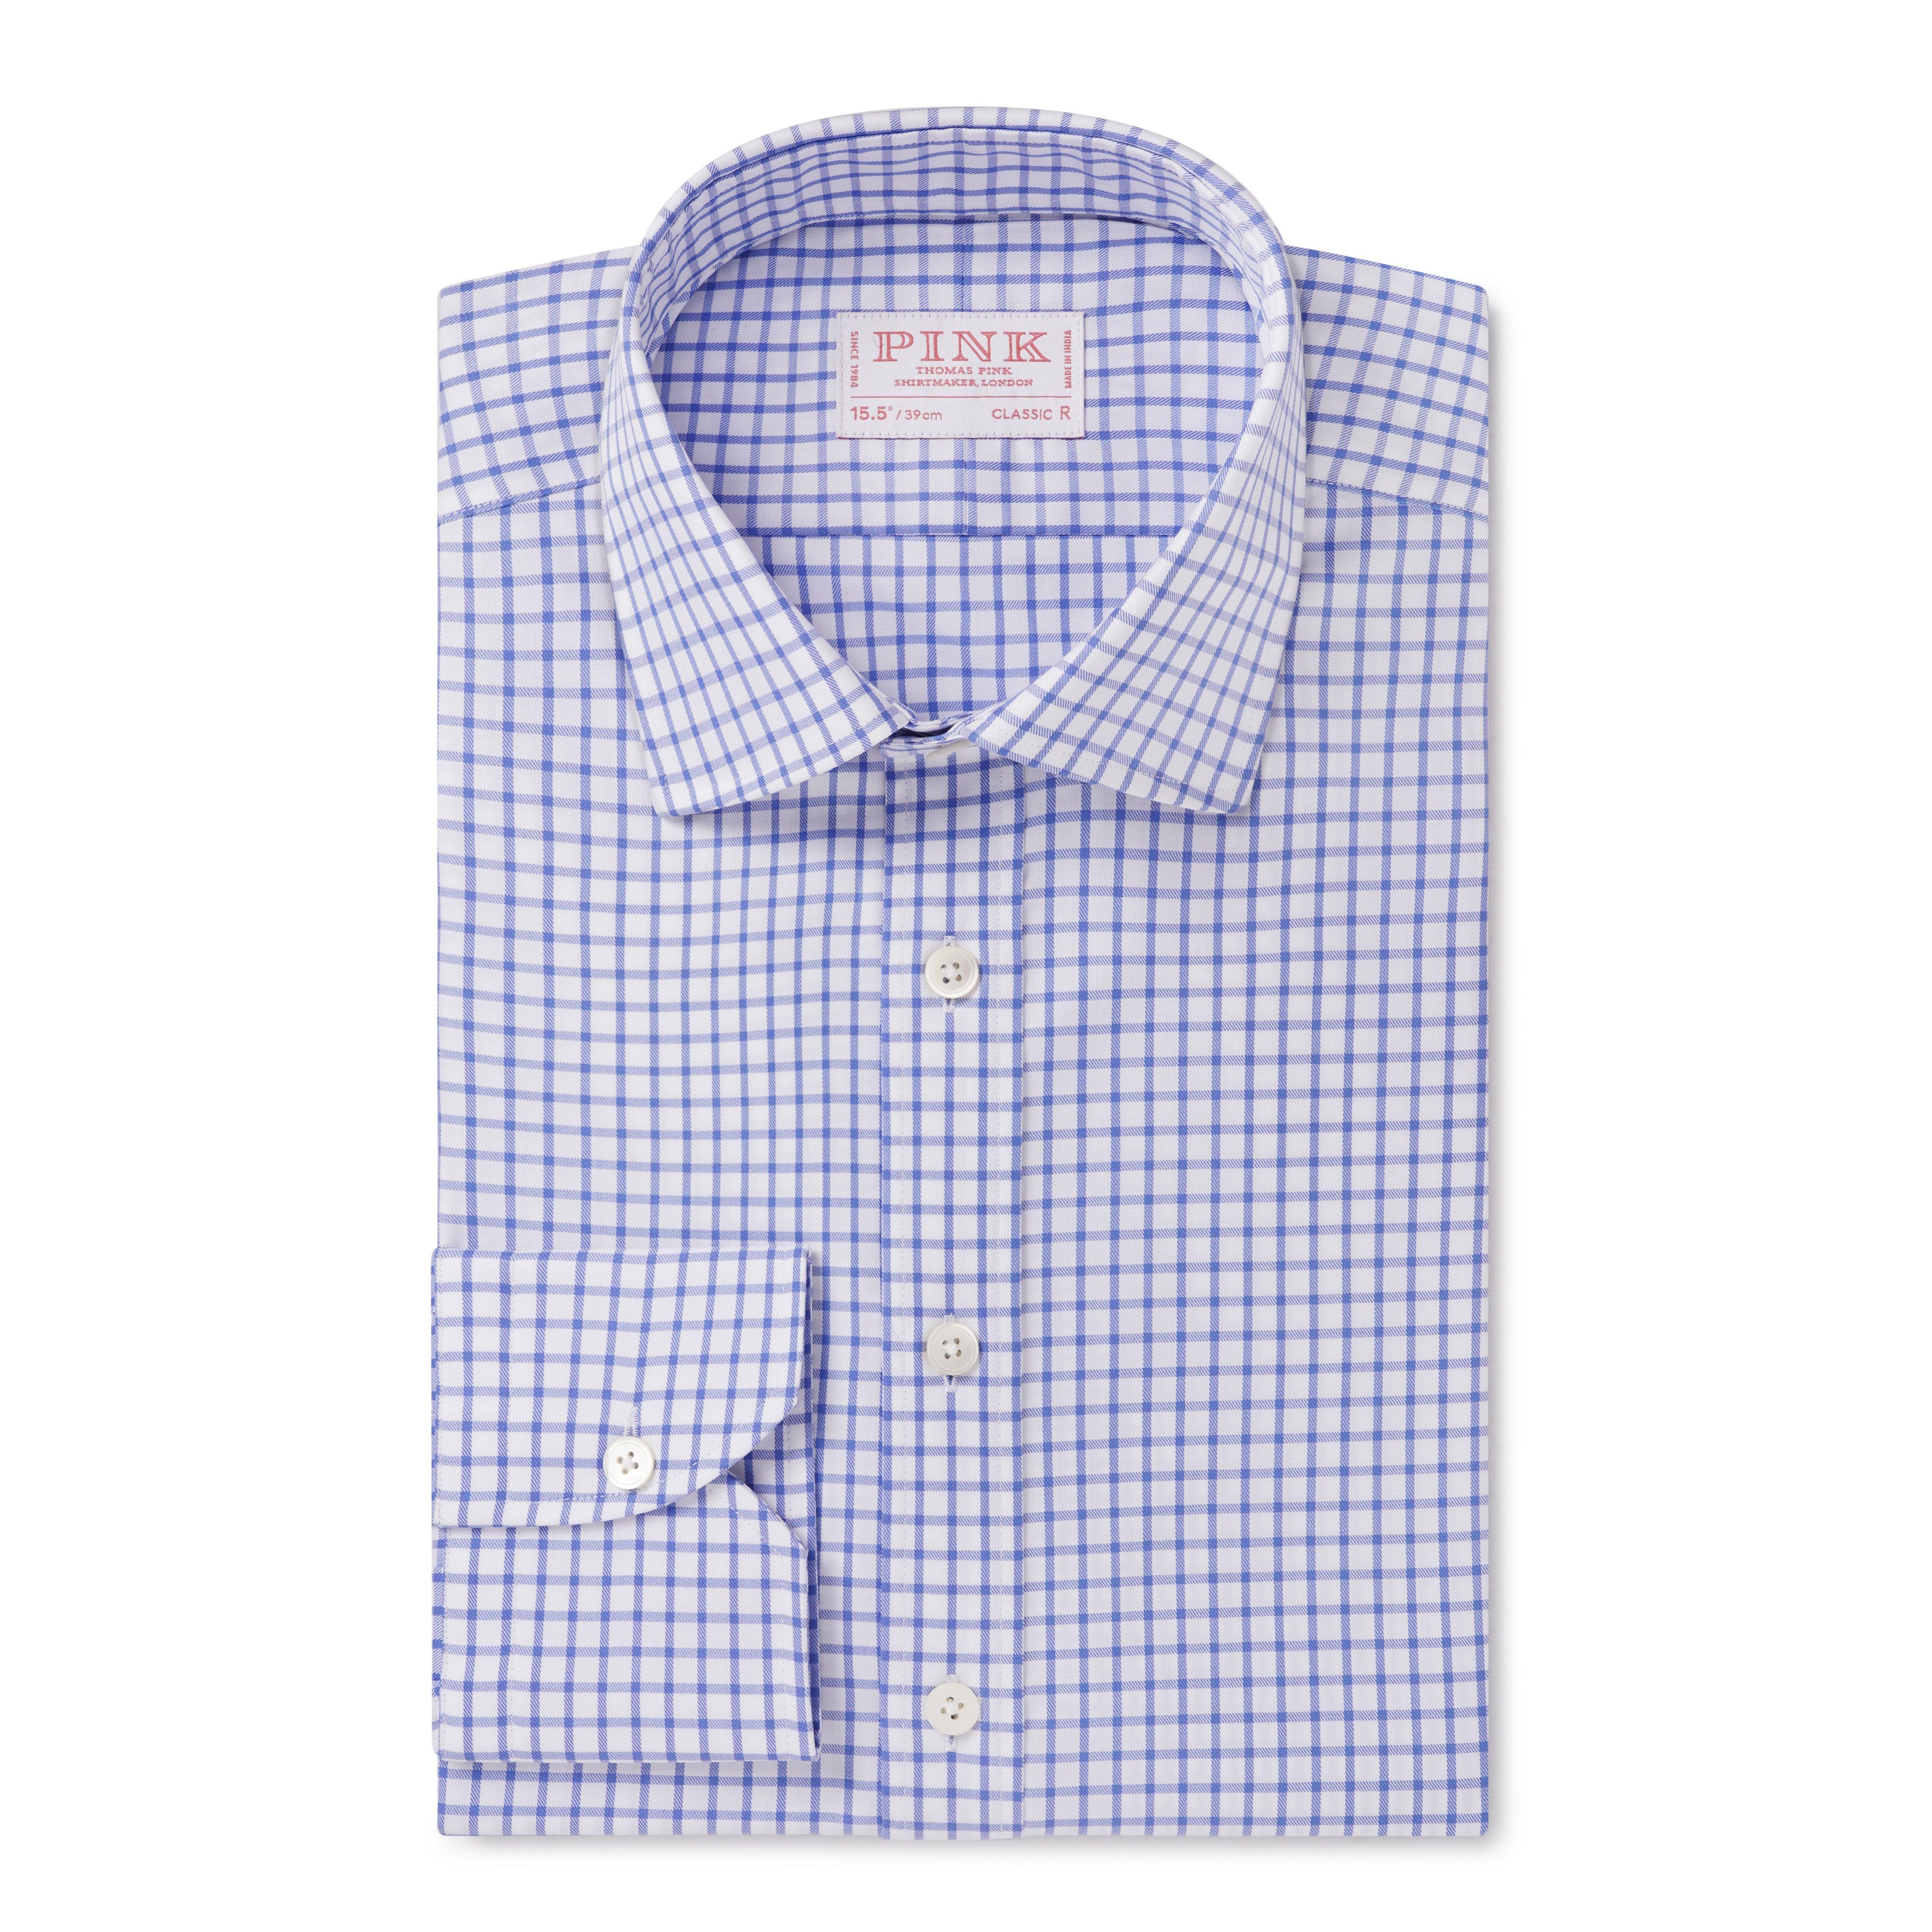 Thomas Pink Men's Checkered Button Down Shirts Pink Blue Size M L Lot 2